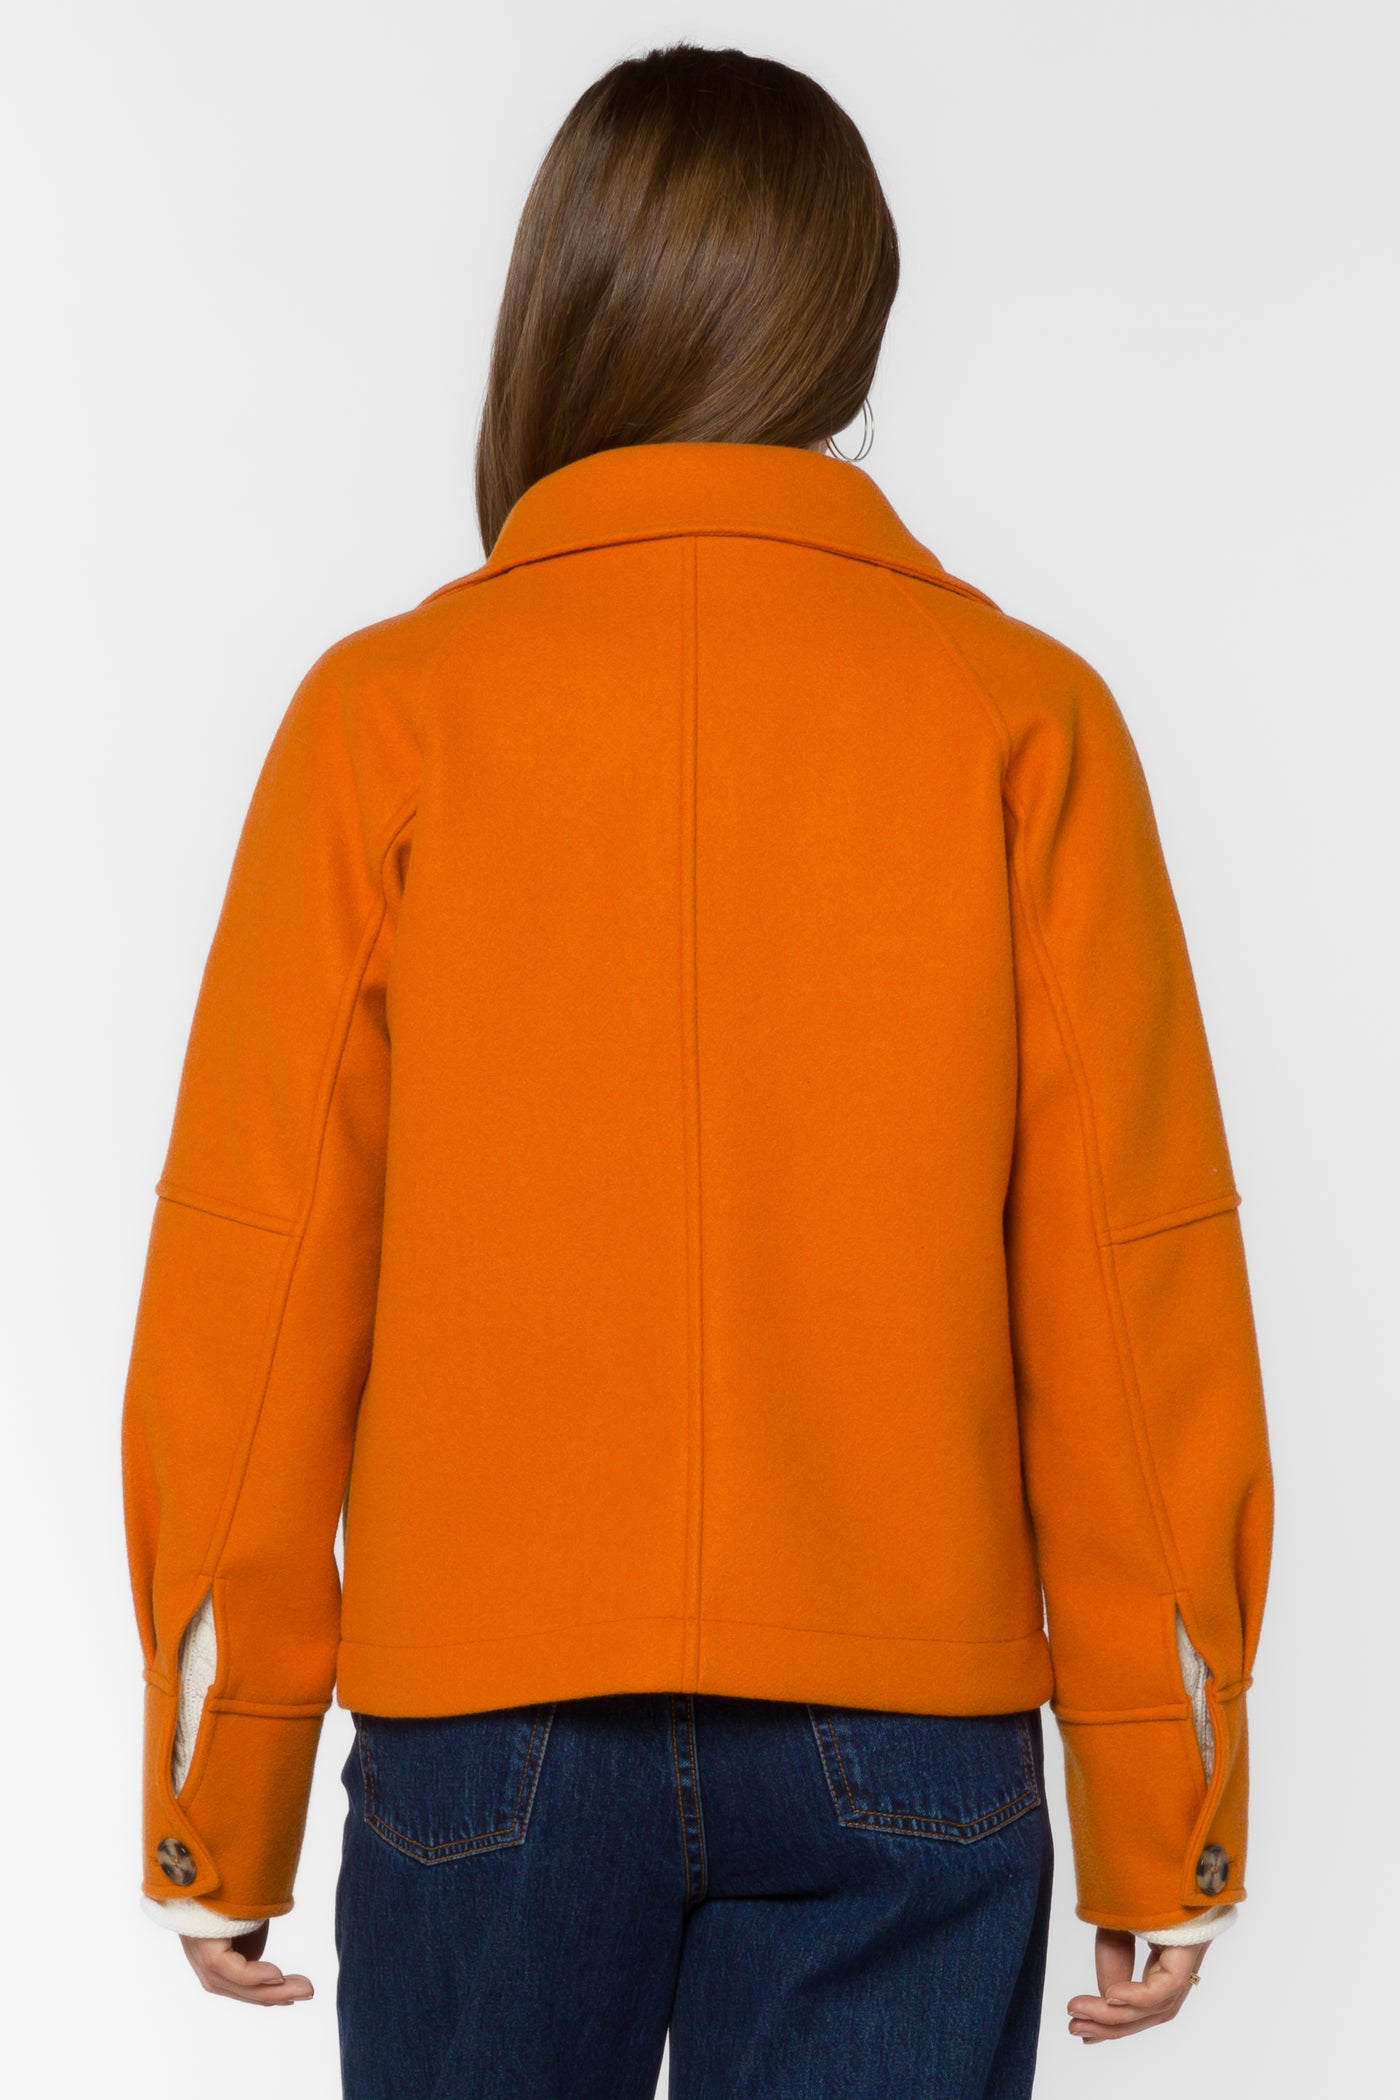 Stassi Pumpkin Jacket - Jackets & Outerwear - Velvet Heart Clothing